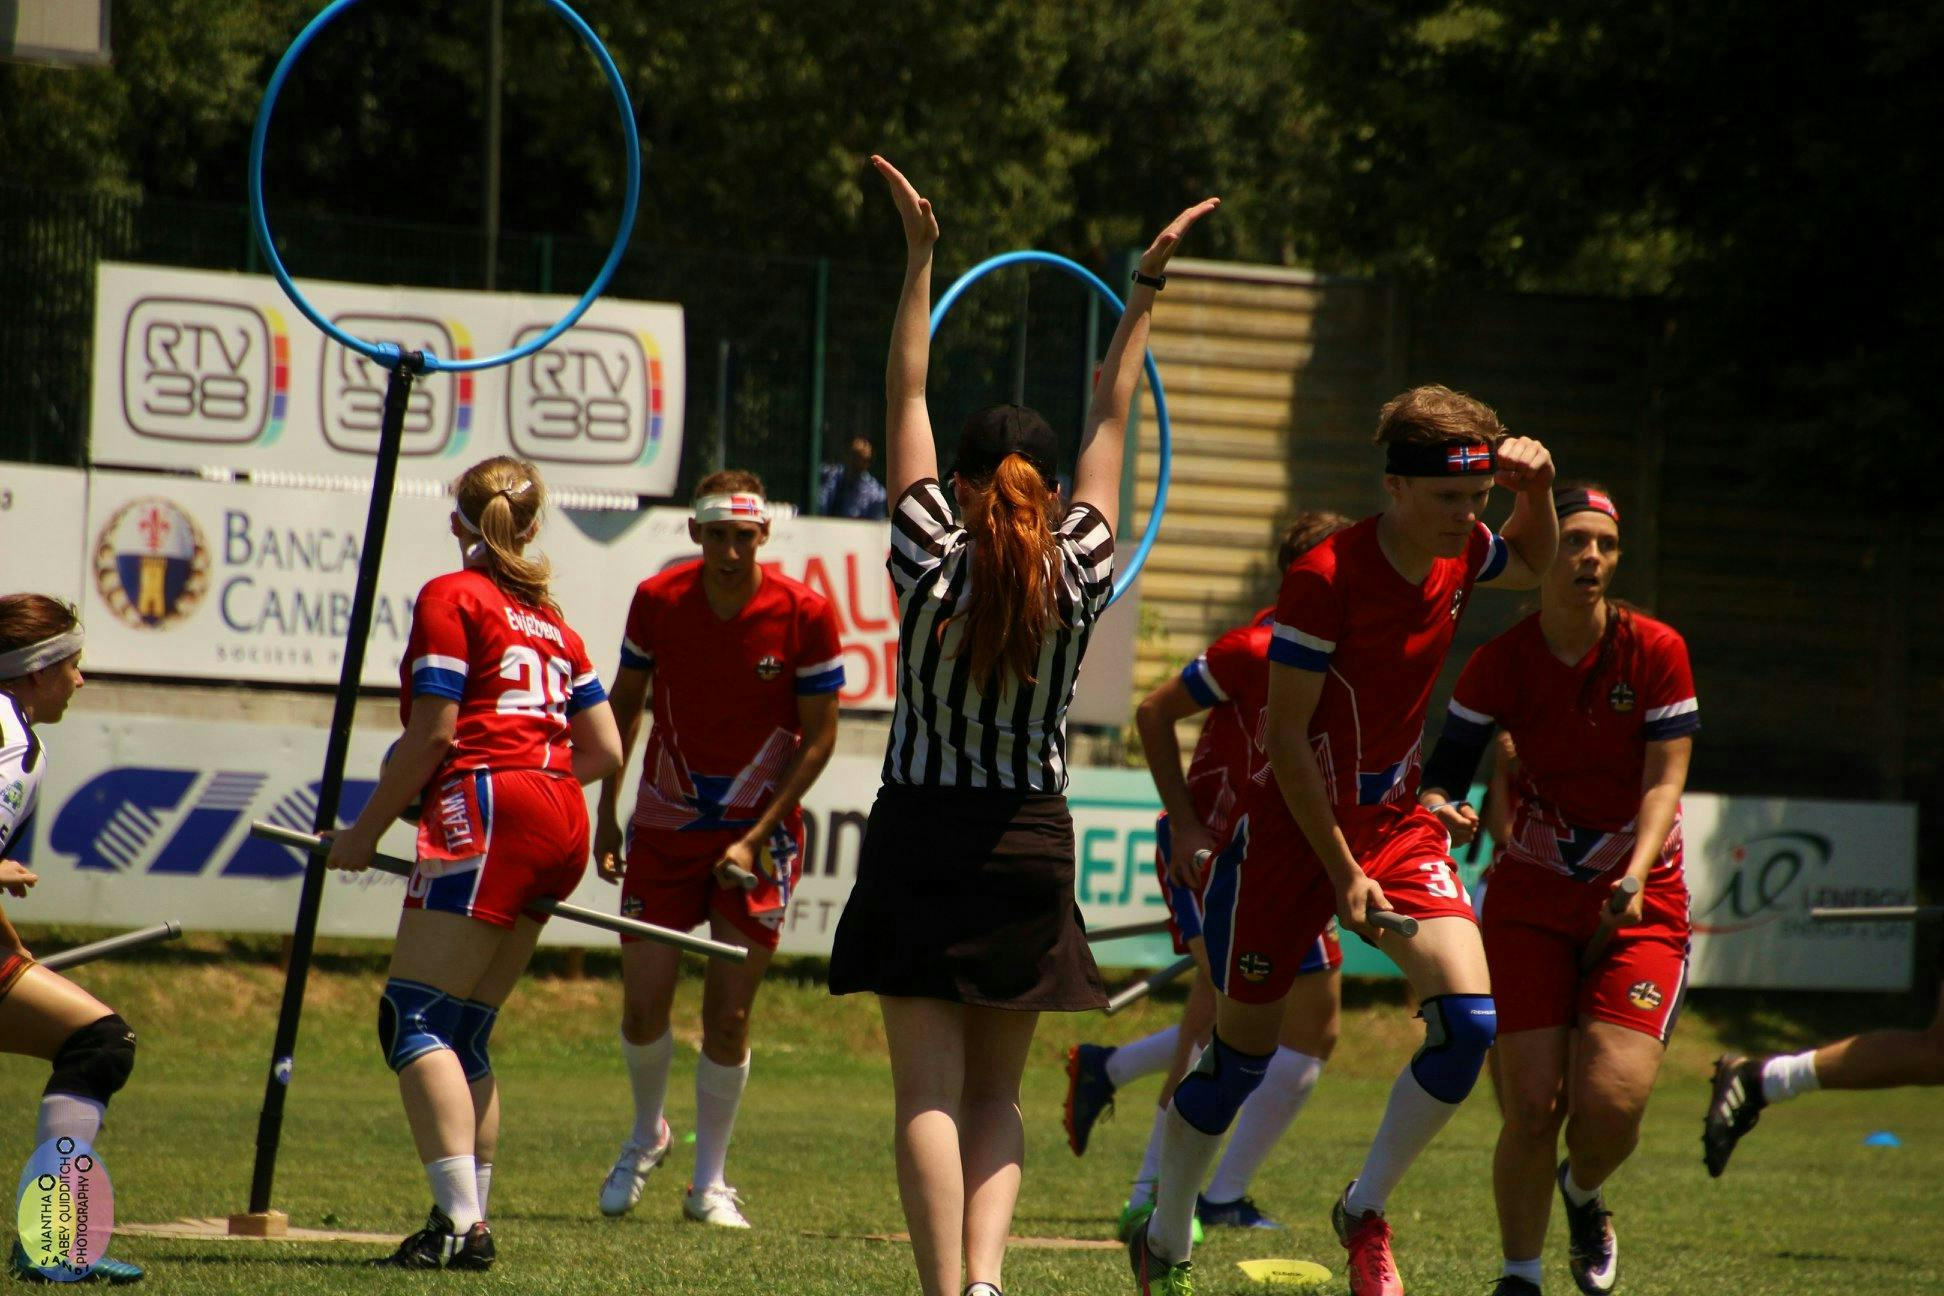 Referee signals a successful goal during a Quidditch match